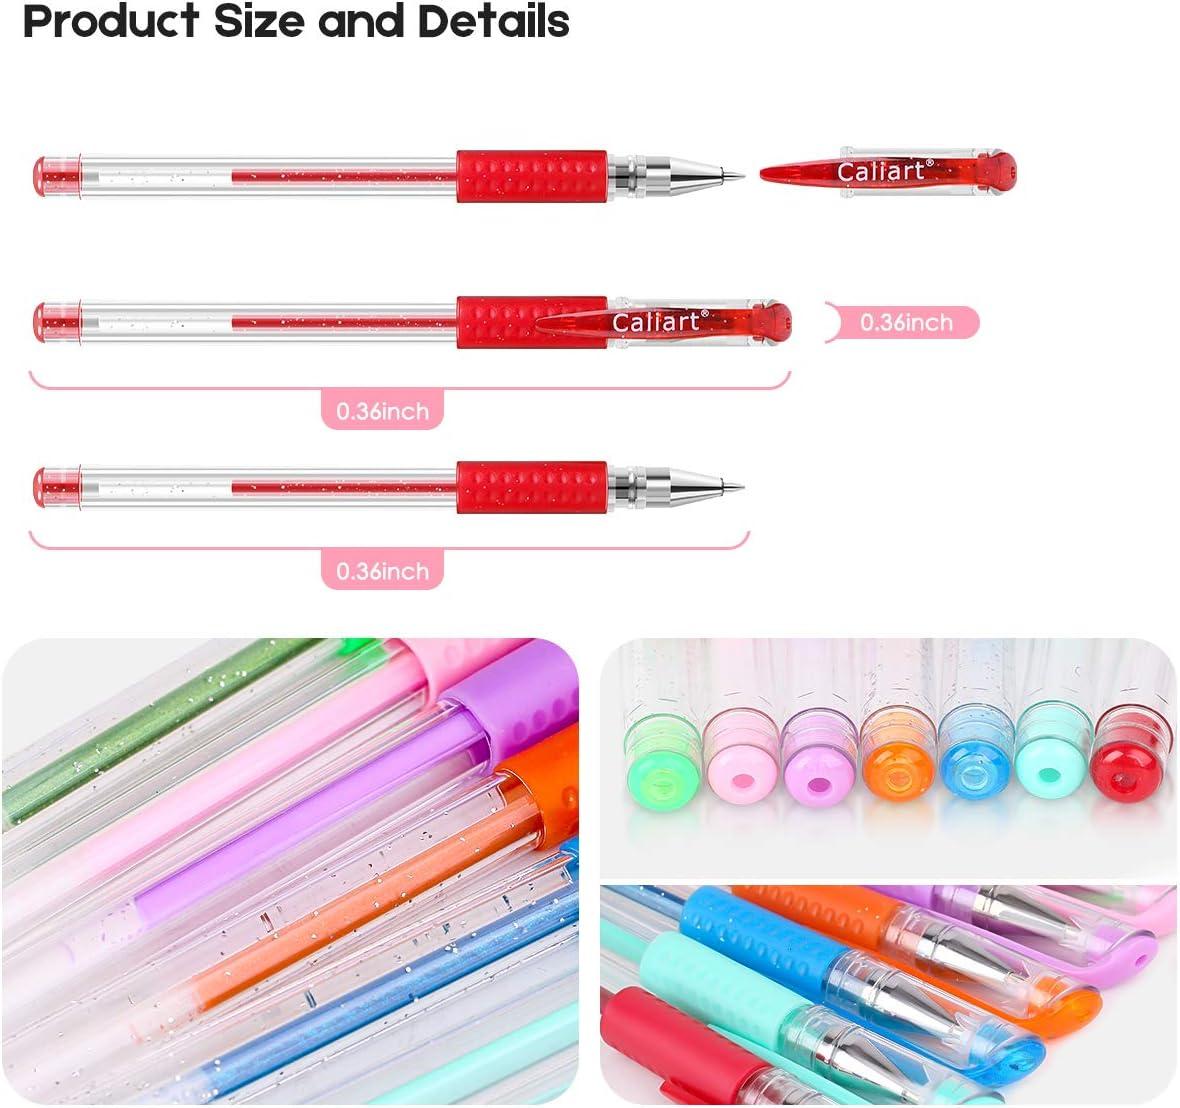 Gel Pens for Adult Coloring Books, 32 Colors Gel Marker Set Colored Pen  with 40% More Ink for Kids Drawing, Doodling, Bullet Journaling, Crafts